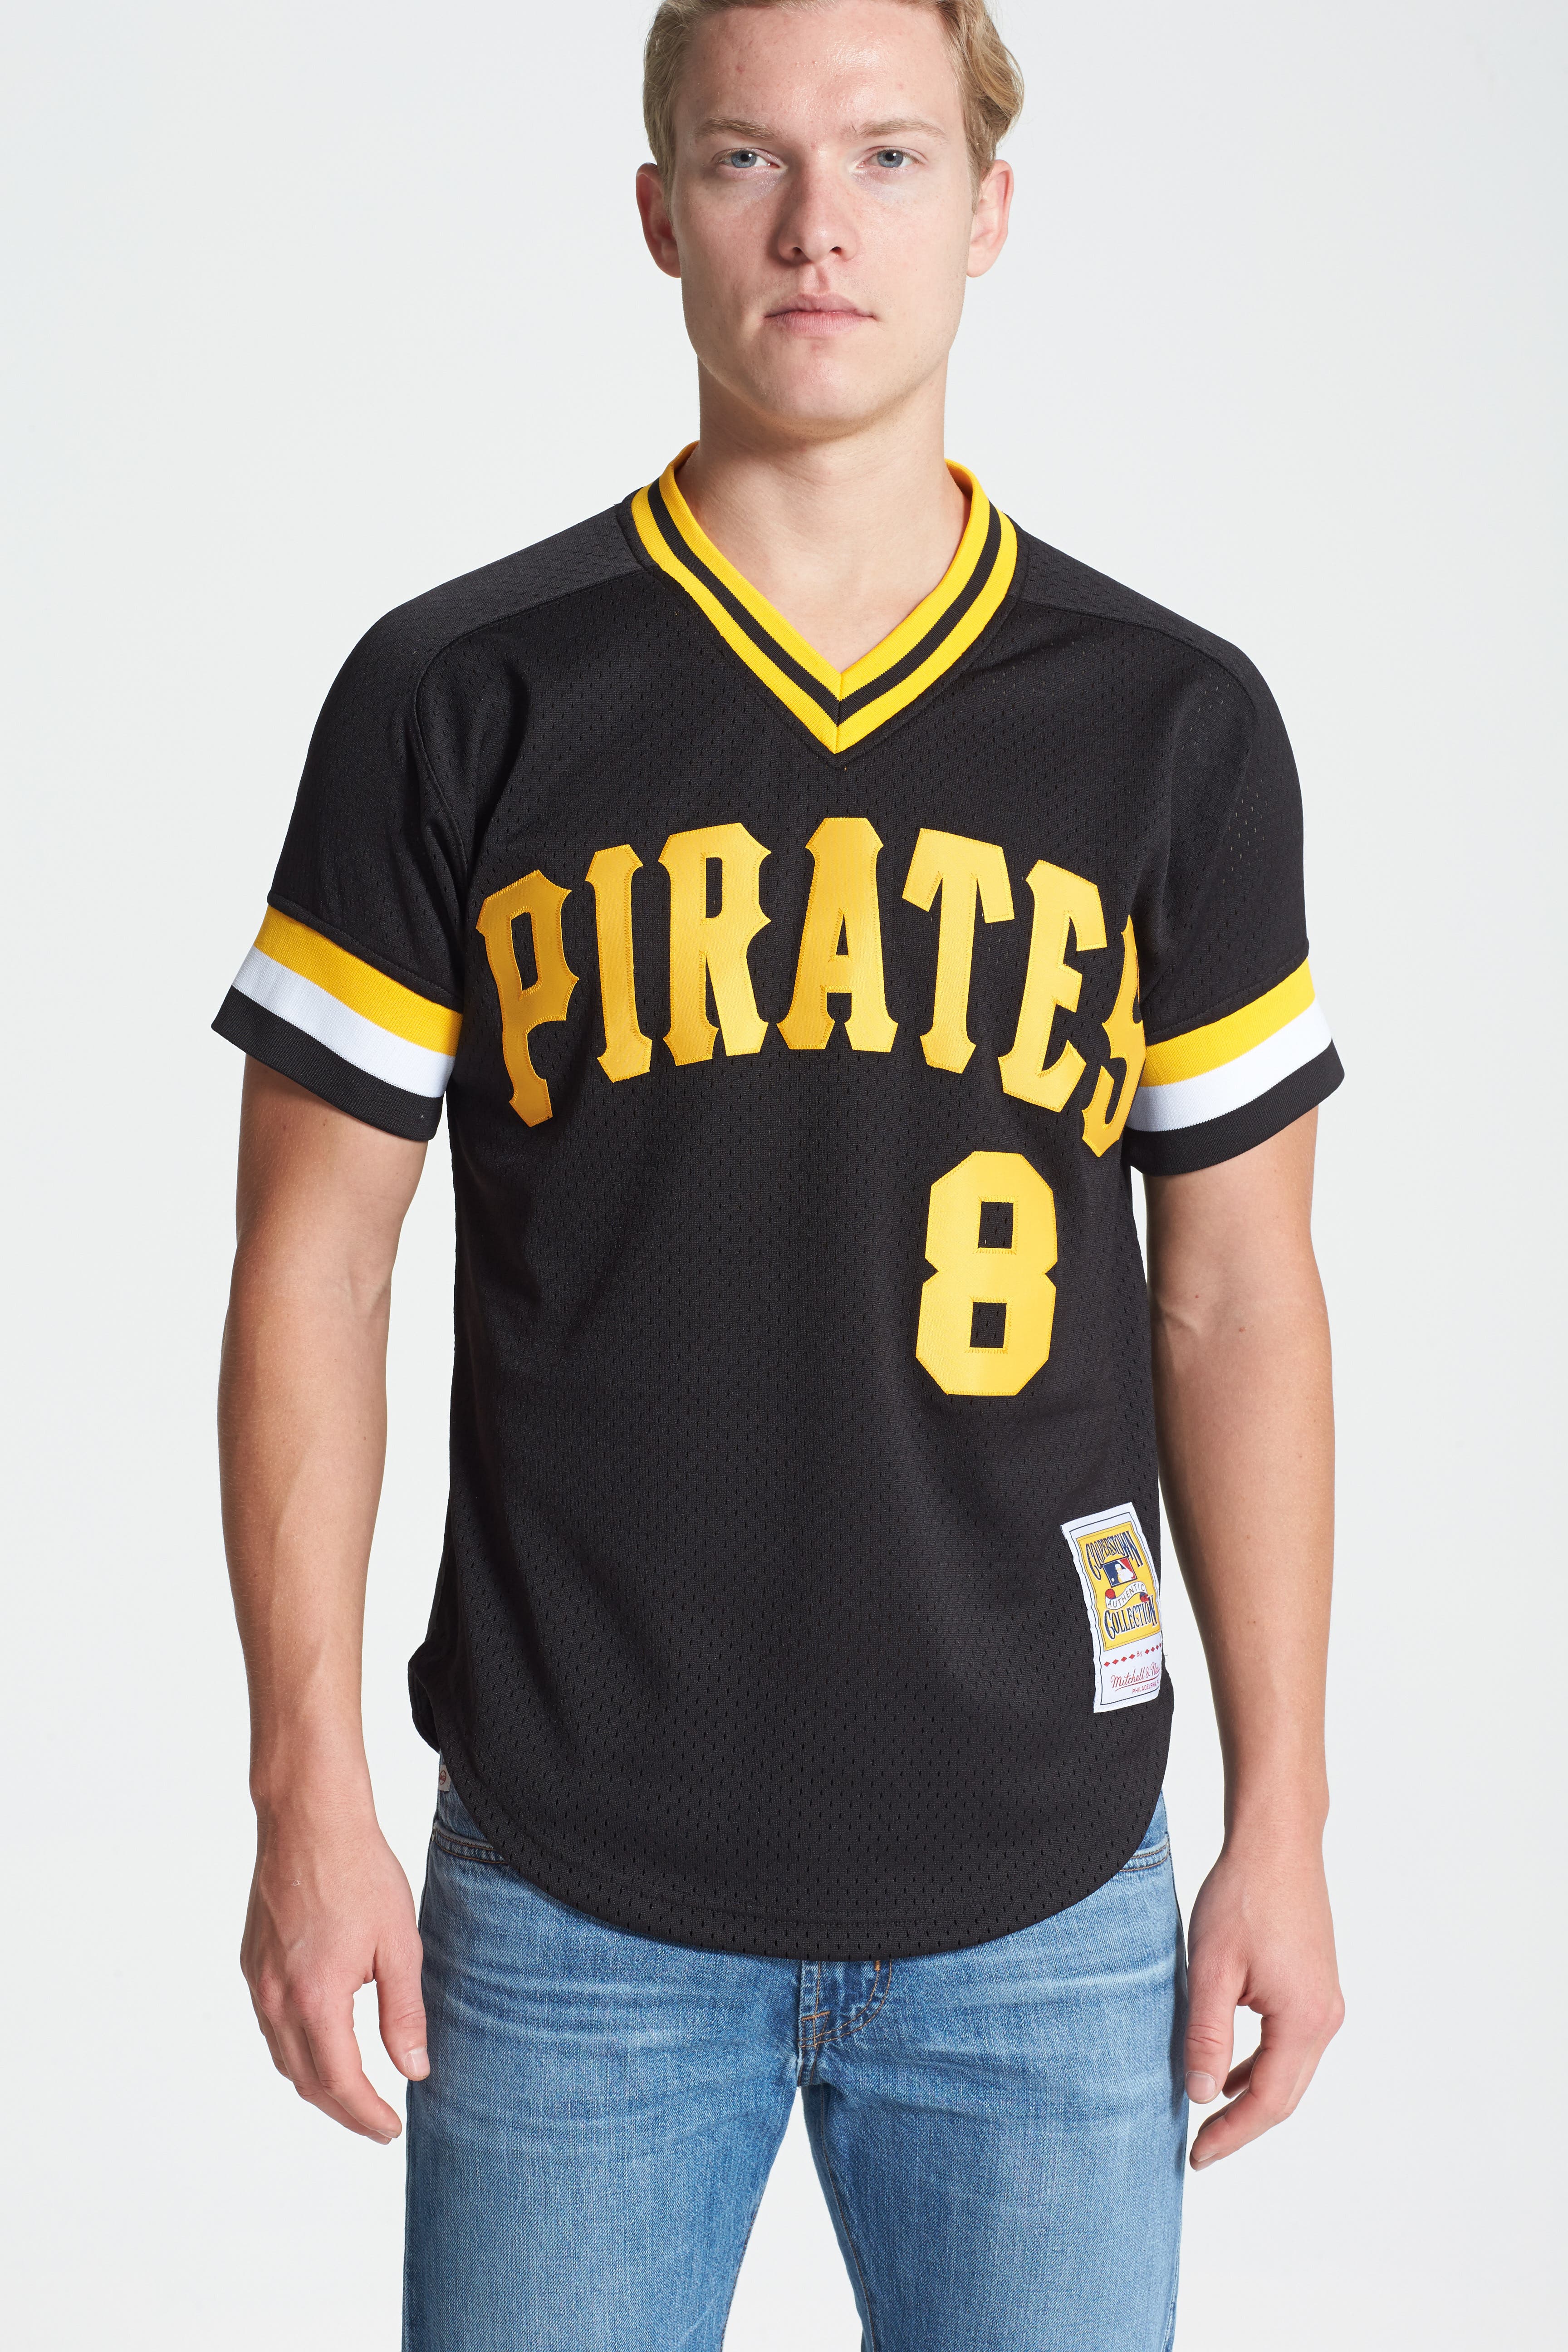 pittsburgh pirate jersey sale